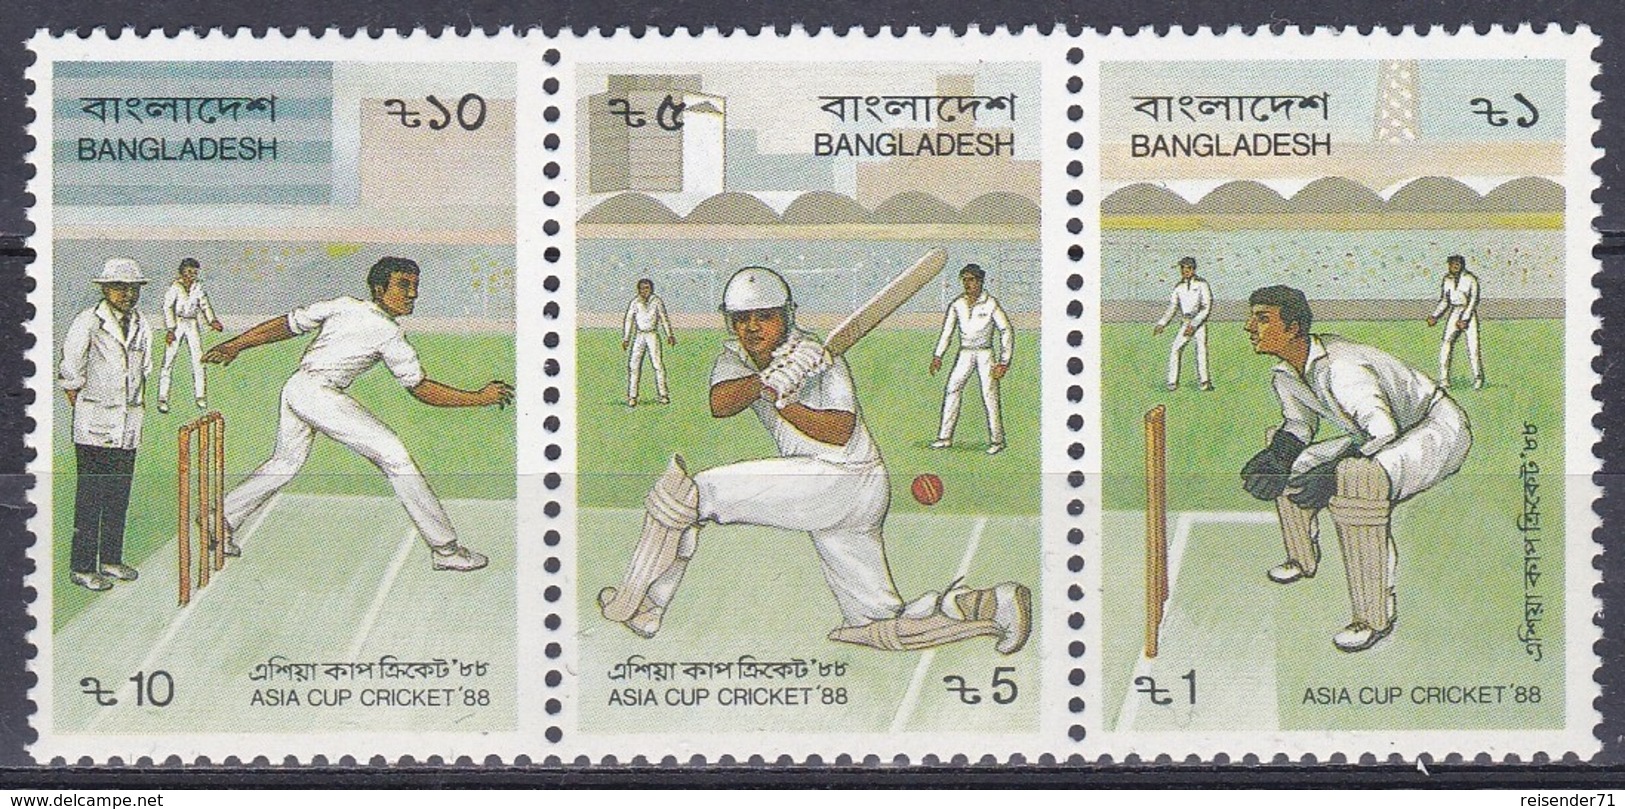 Bangladesch Bangladesh 1988 Sport Spiele Ballspiele Kricket-Asia-Cup Cricket, Mi. 289-1 ** - Bangladesch